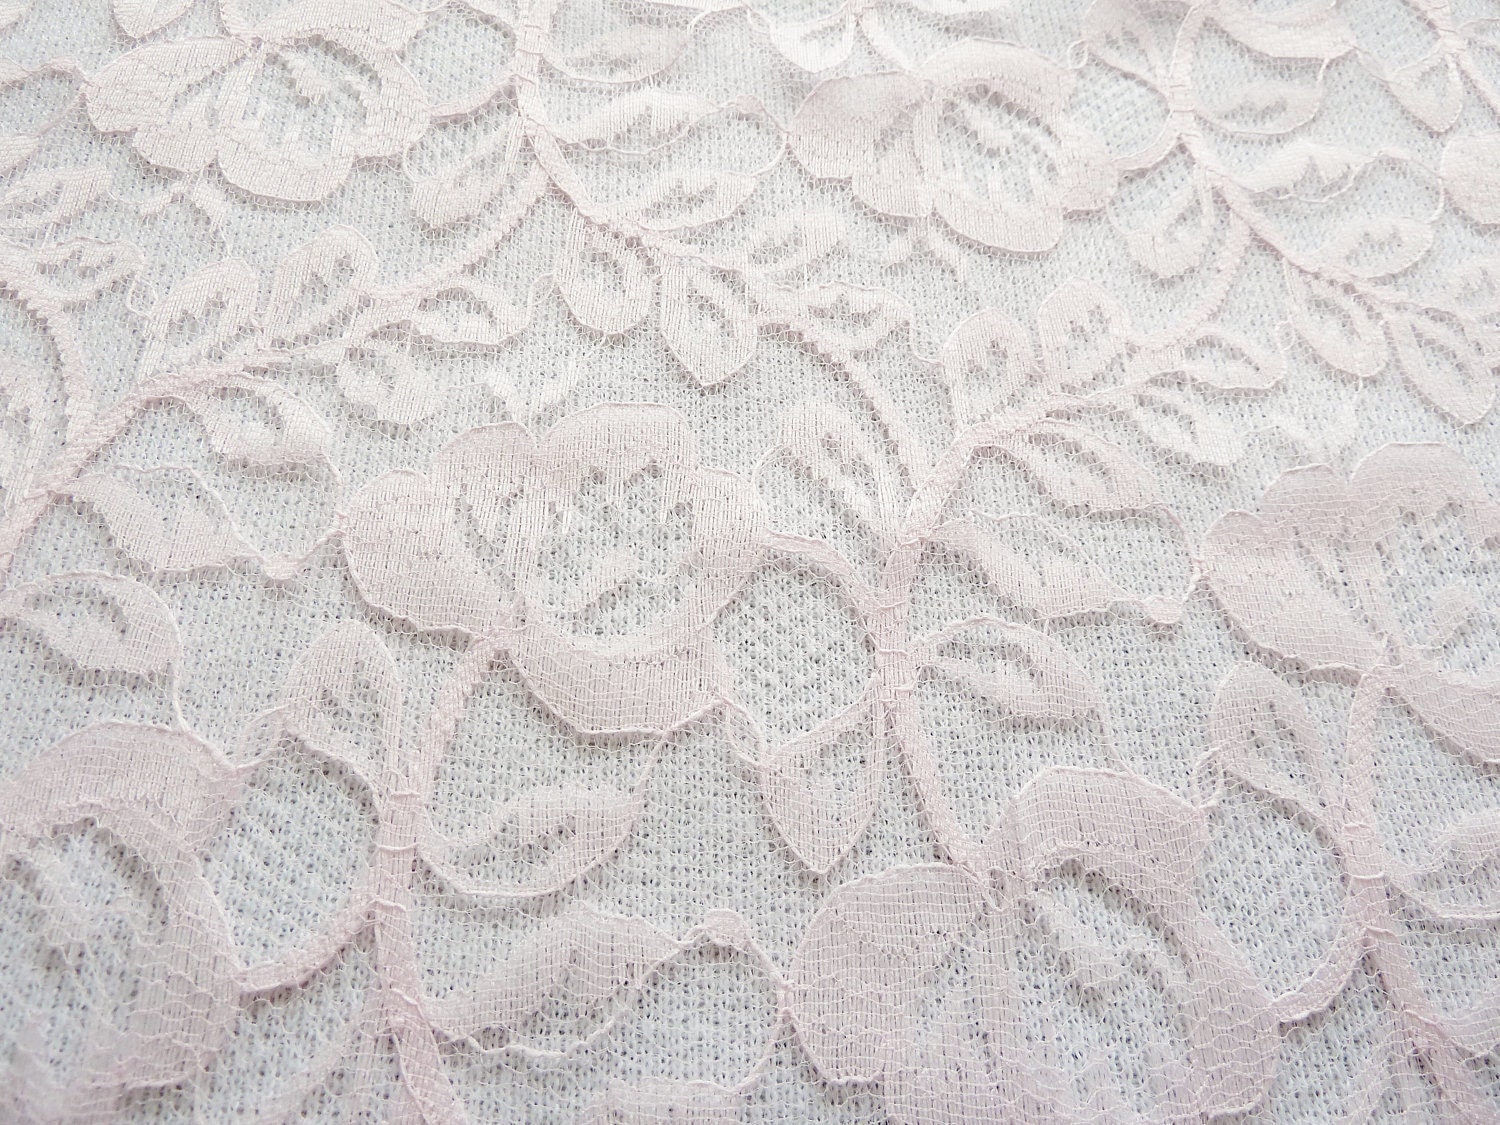 Pink Lace Fabric